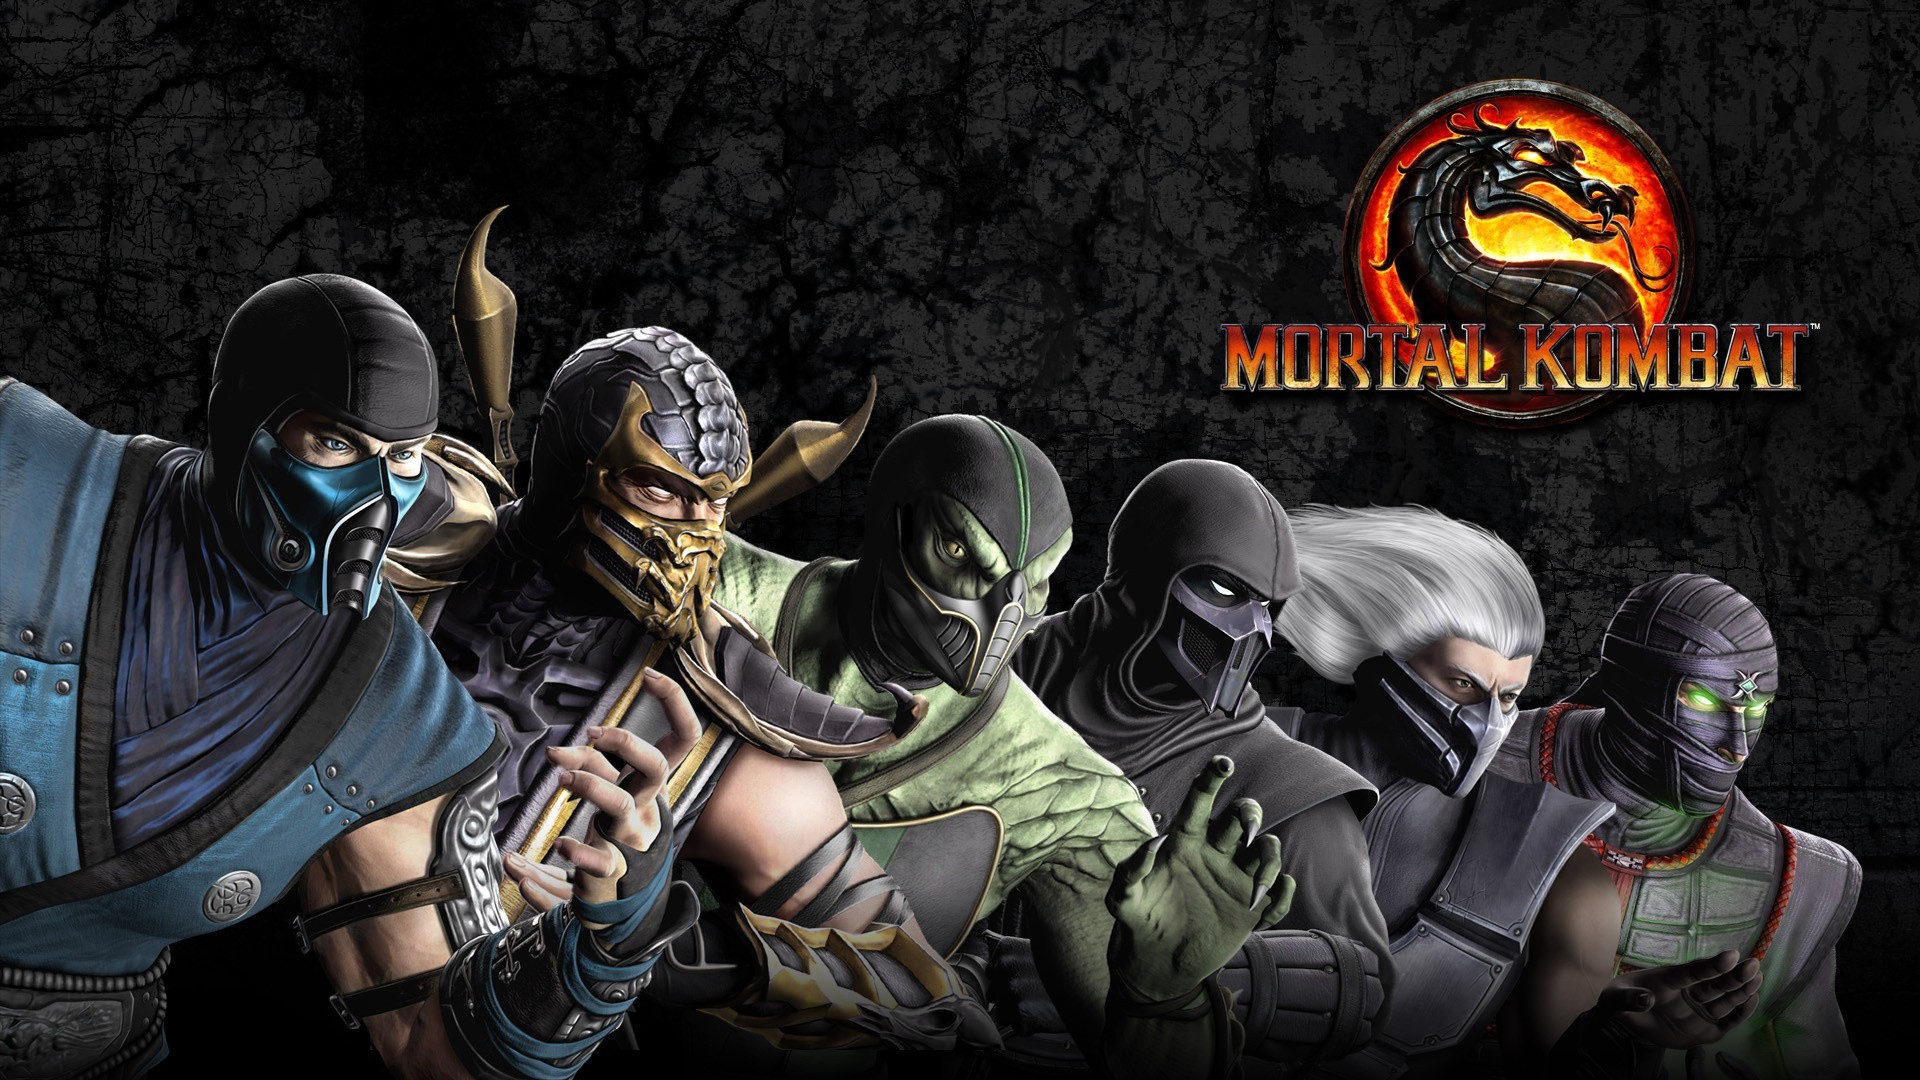 Mortal Kombat, Scorpion (character), Sub Zero, Reptile (Mortal Kombat) Wallpaper